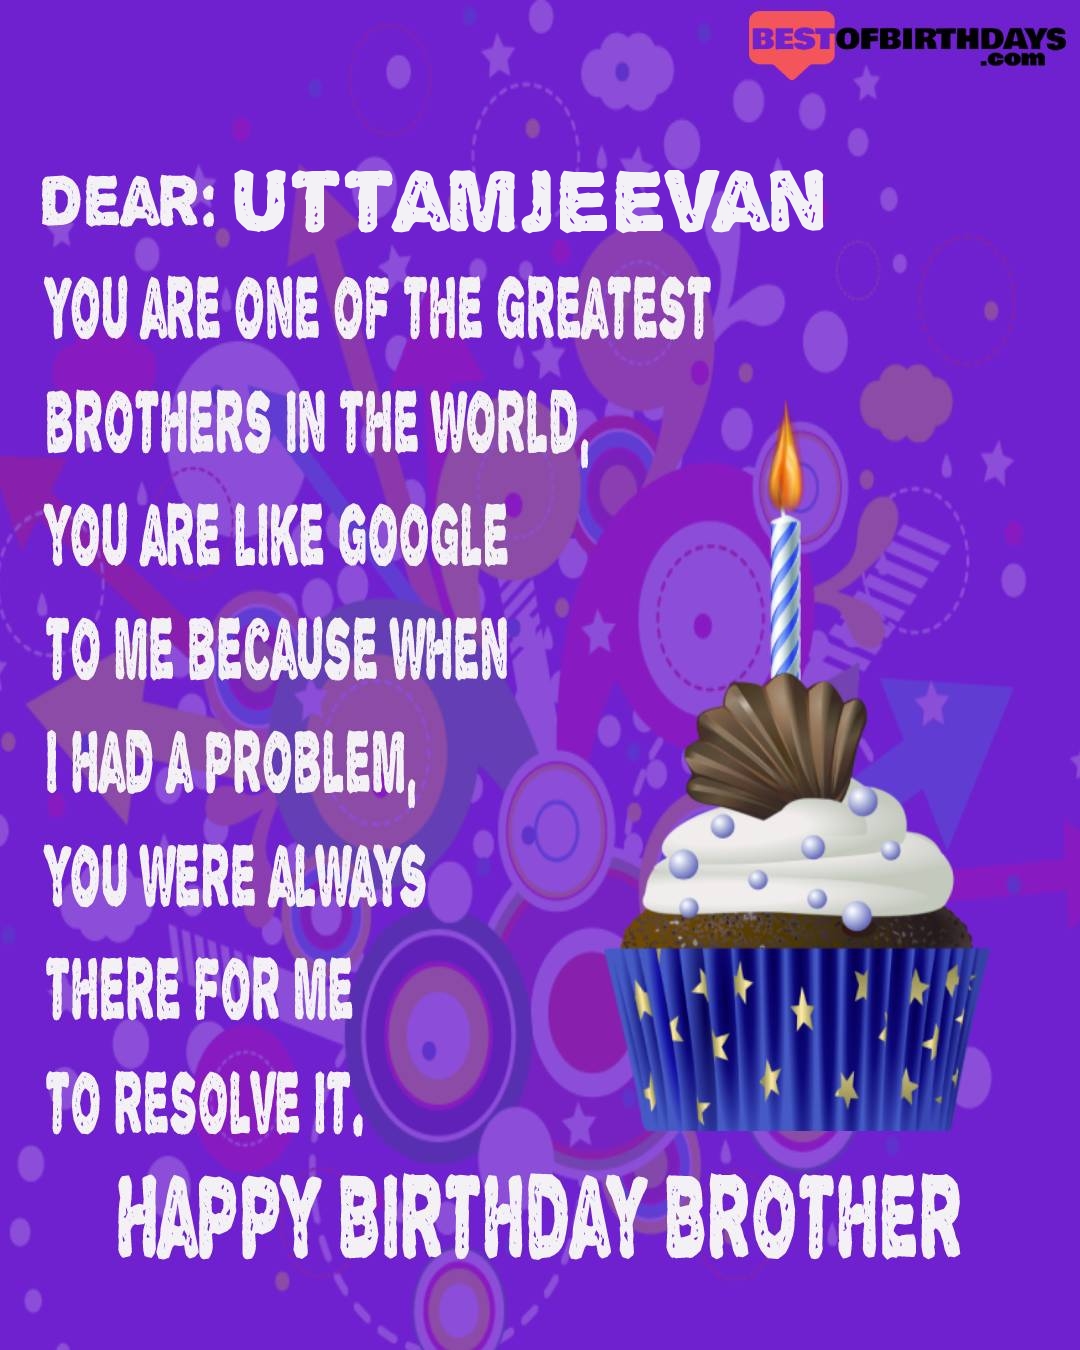 Happy birthday uttamjeevan bhai brother bro